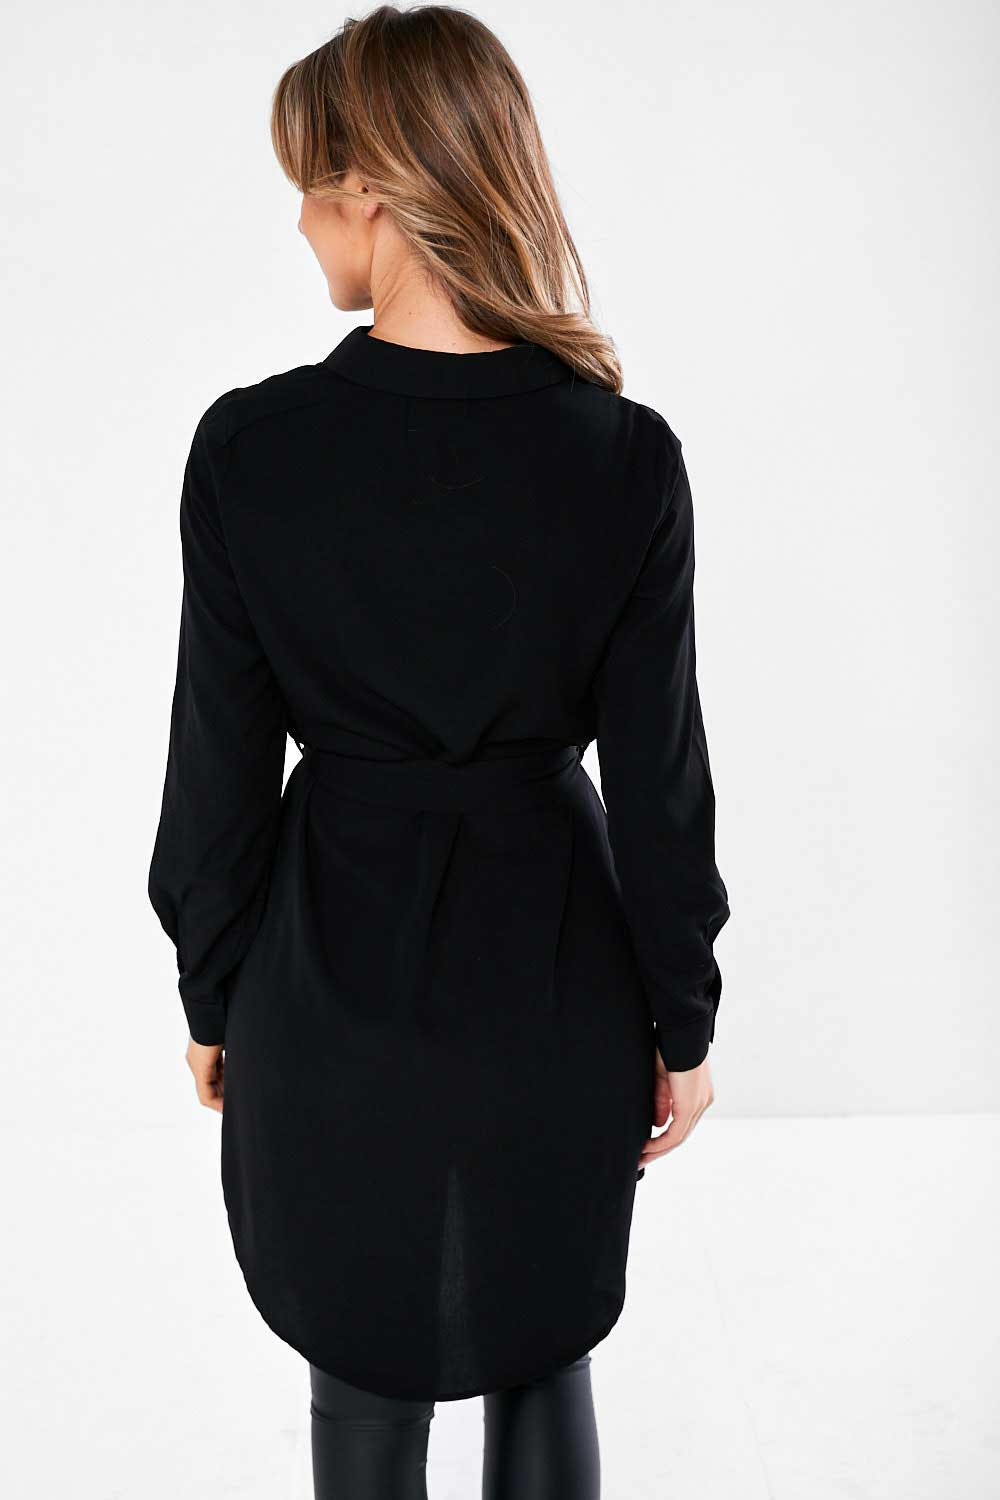 Vero Moda Boa Shirt Dress in Black | iCLOTHING